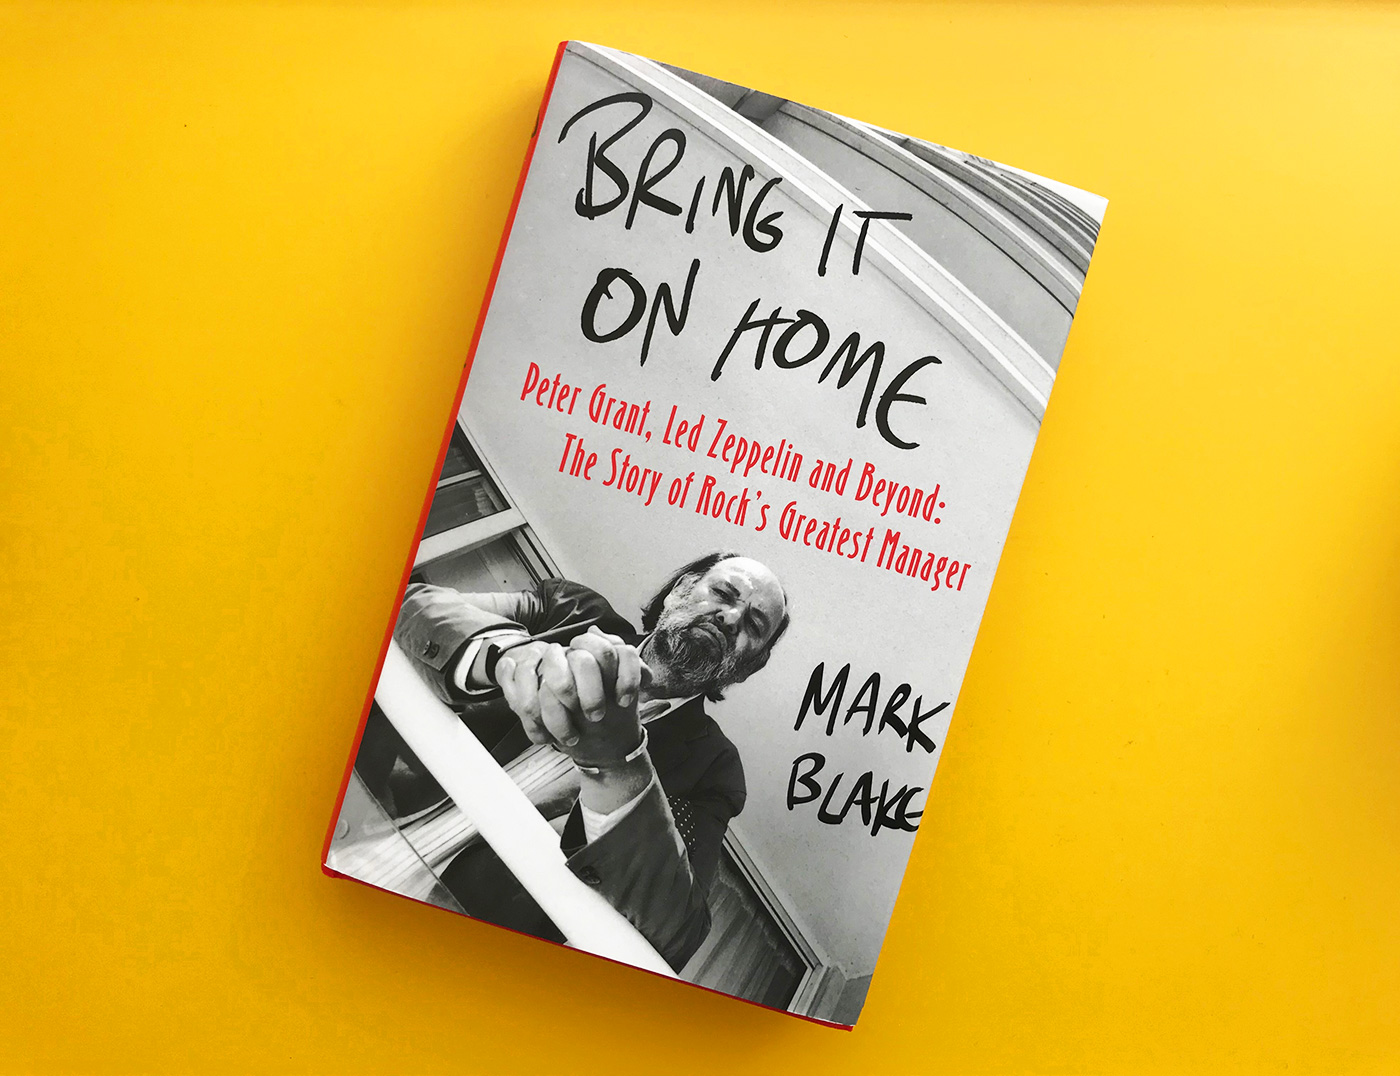 Mark Blake - Bring it on home